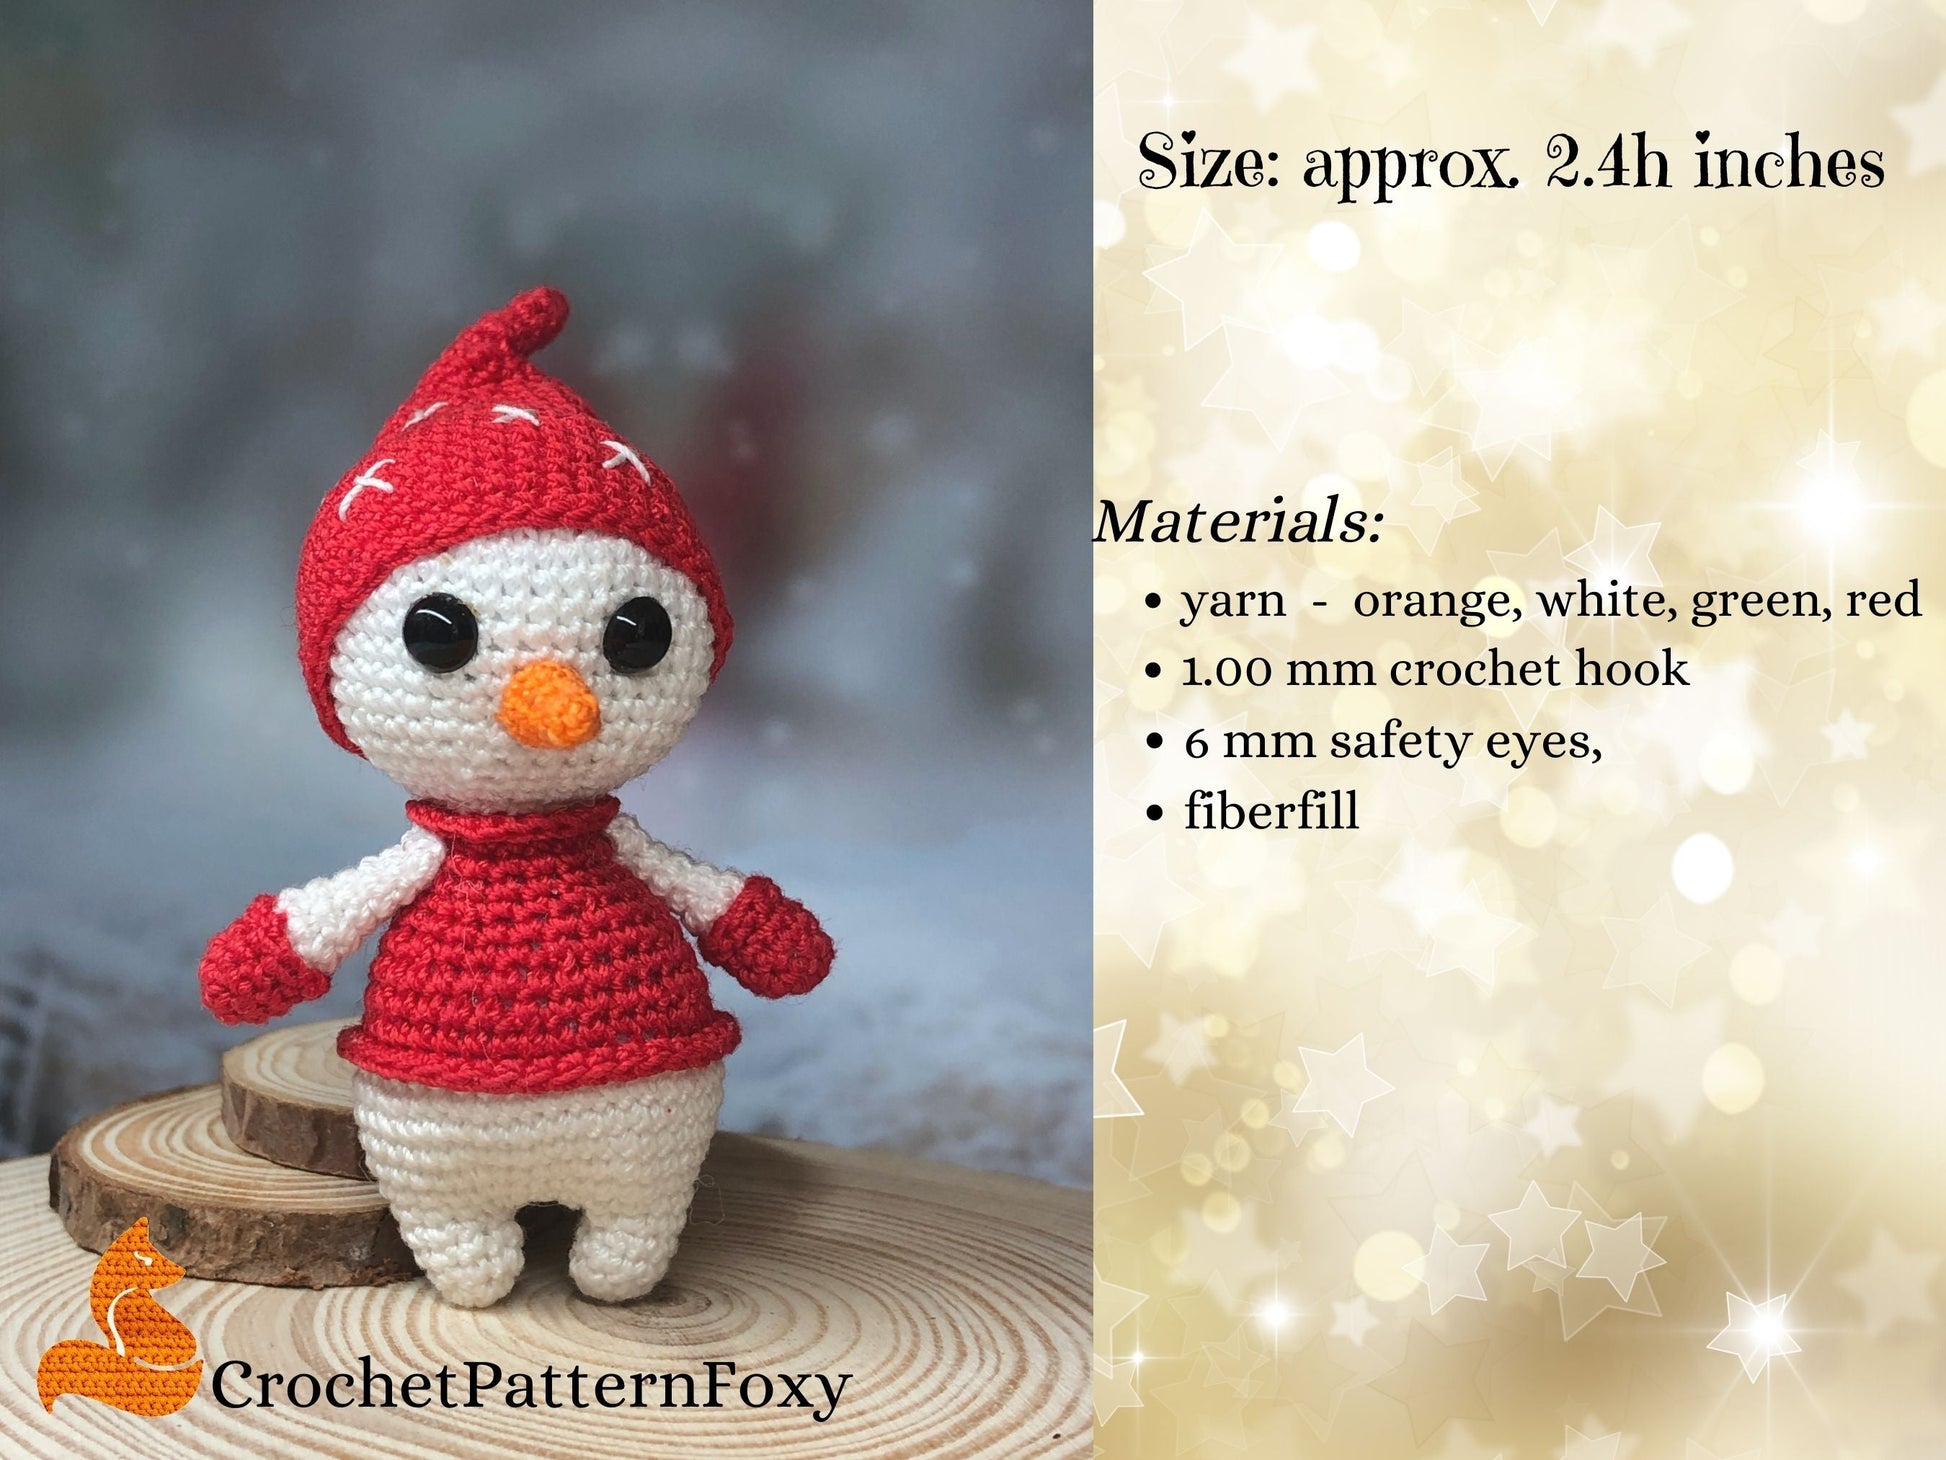 Snowman Crochet Pattern Amigurumi